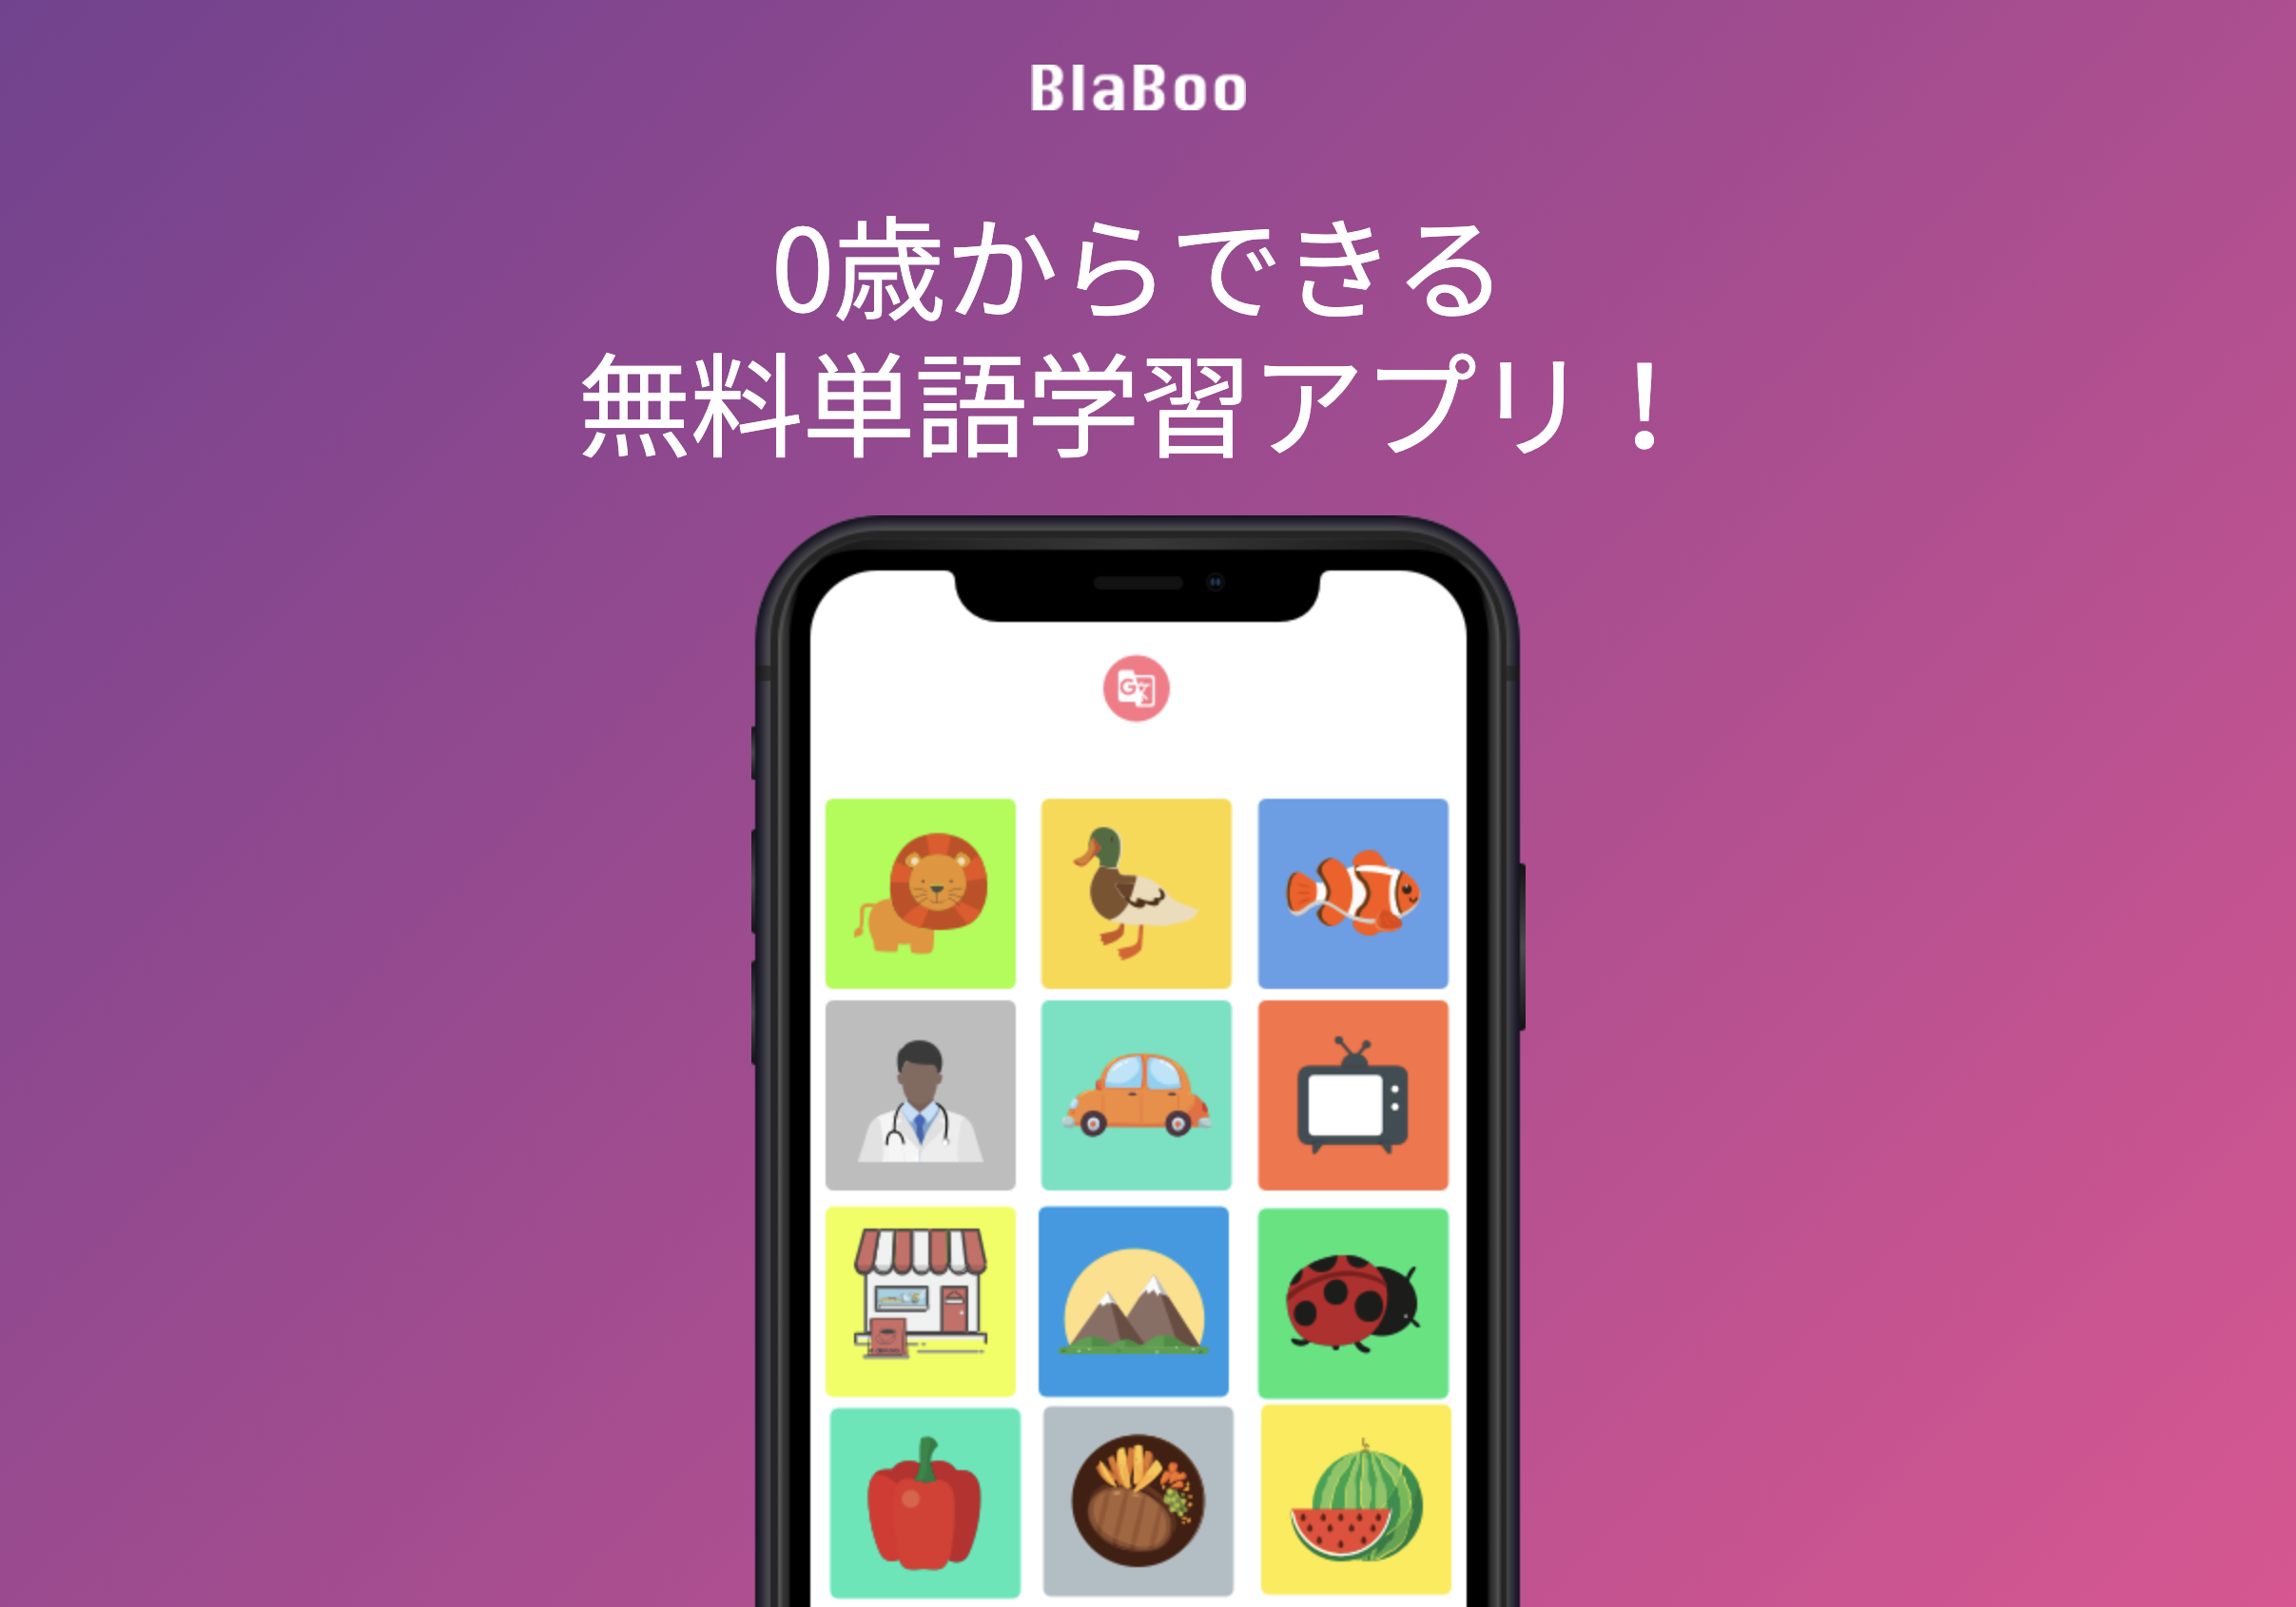 word learning app
                  for kids, BlaBoo